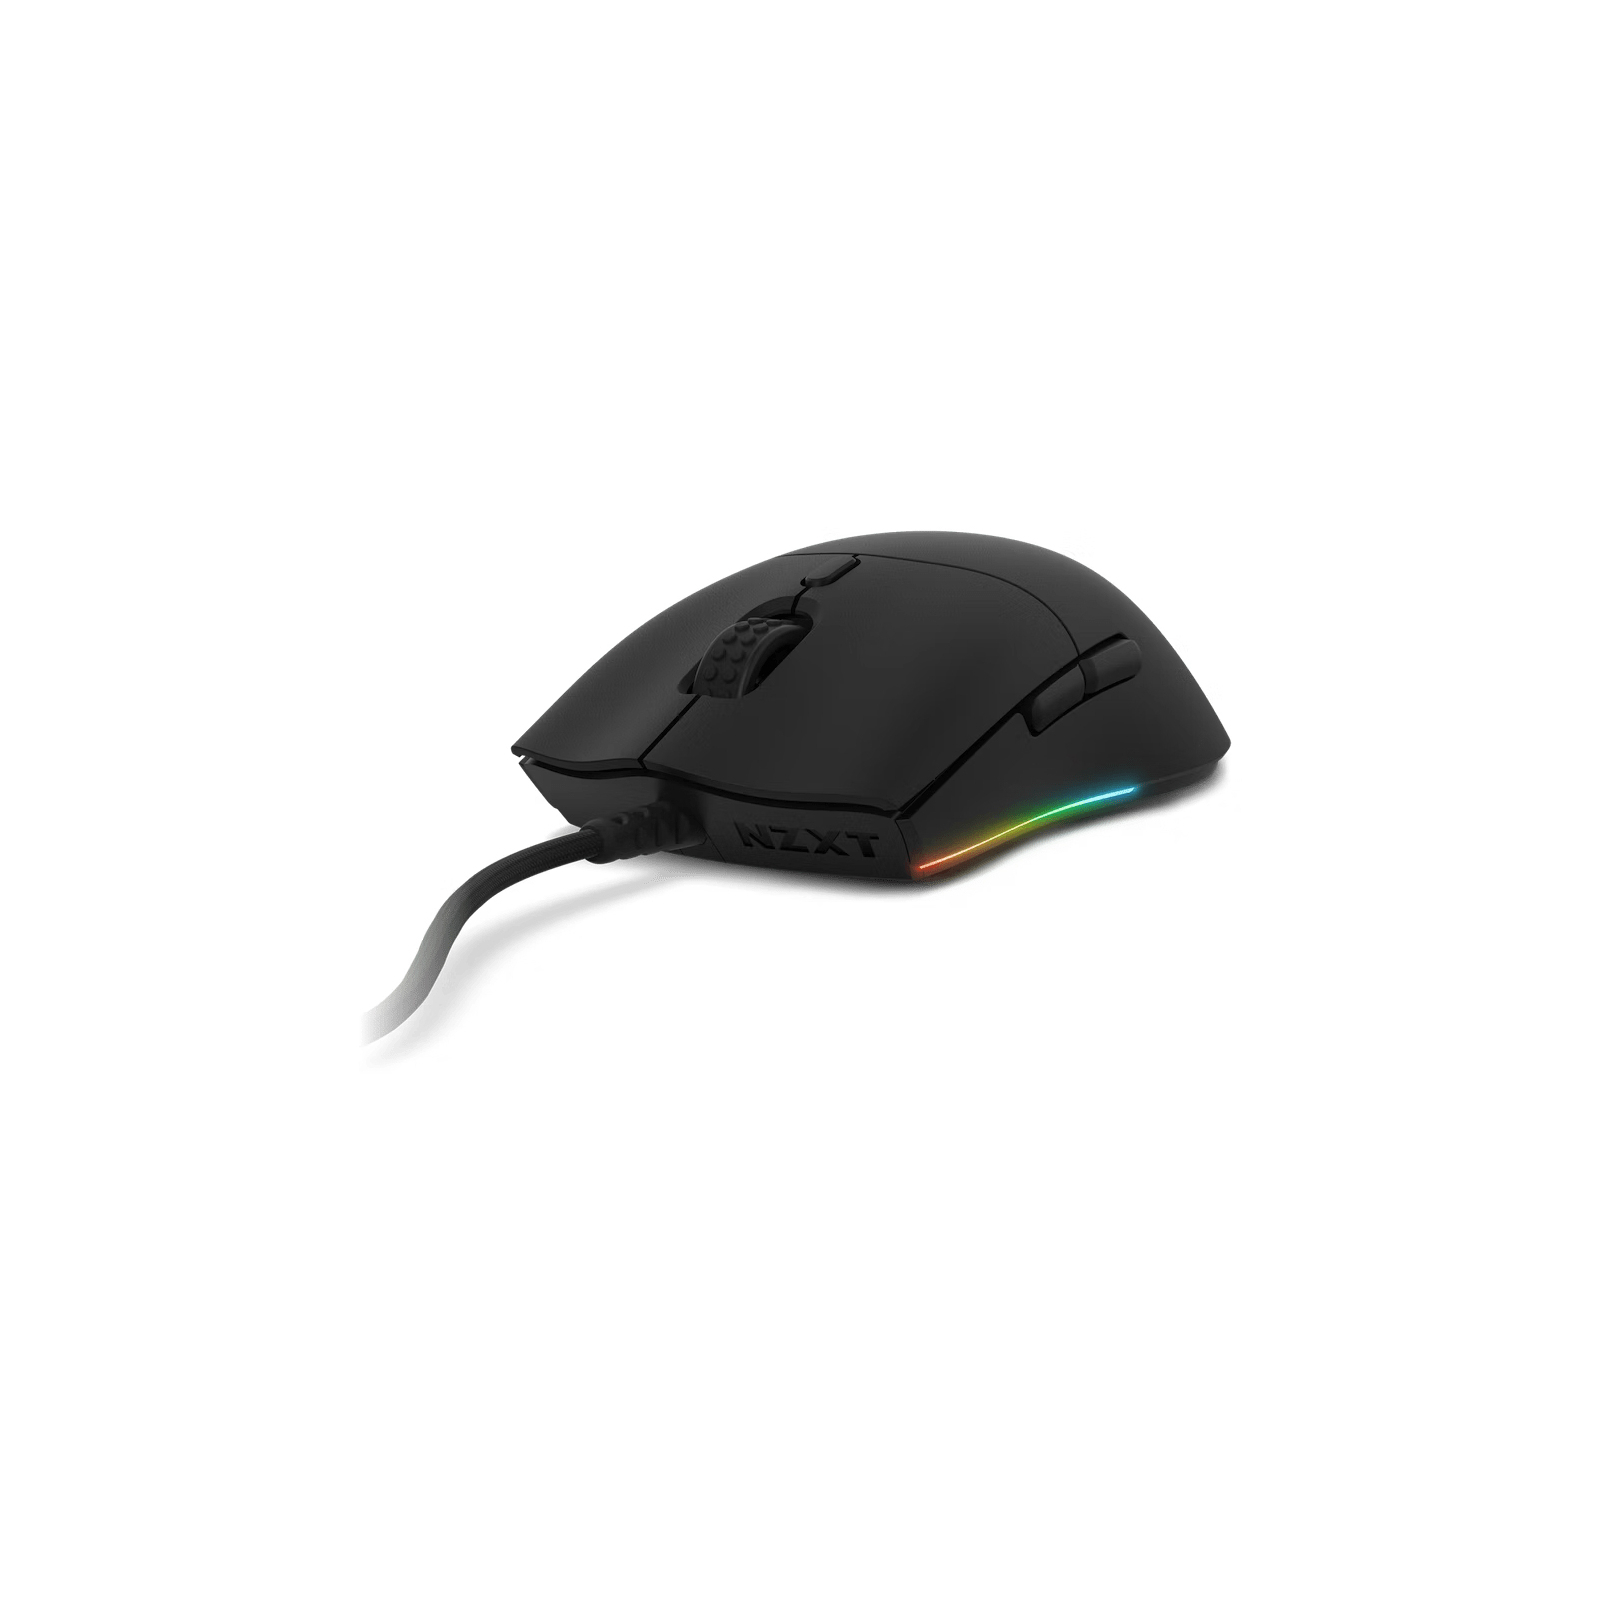 Мышка NZXT LIFT Wired Mouse Ambidextrous USB White (MS-1WRAX-WM) изображение 2